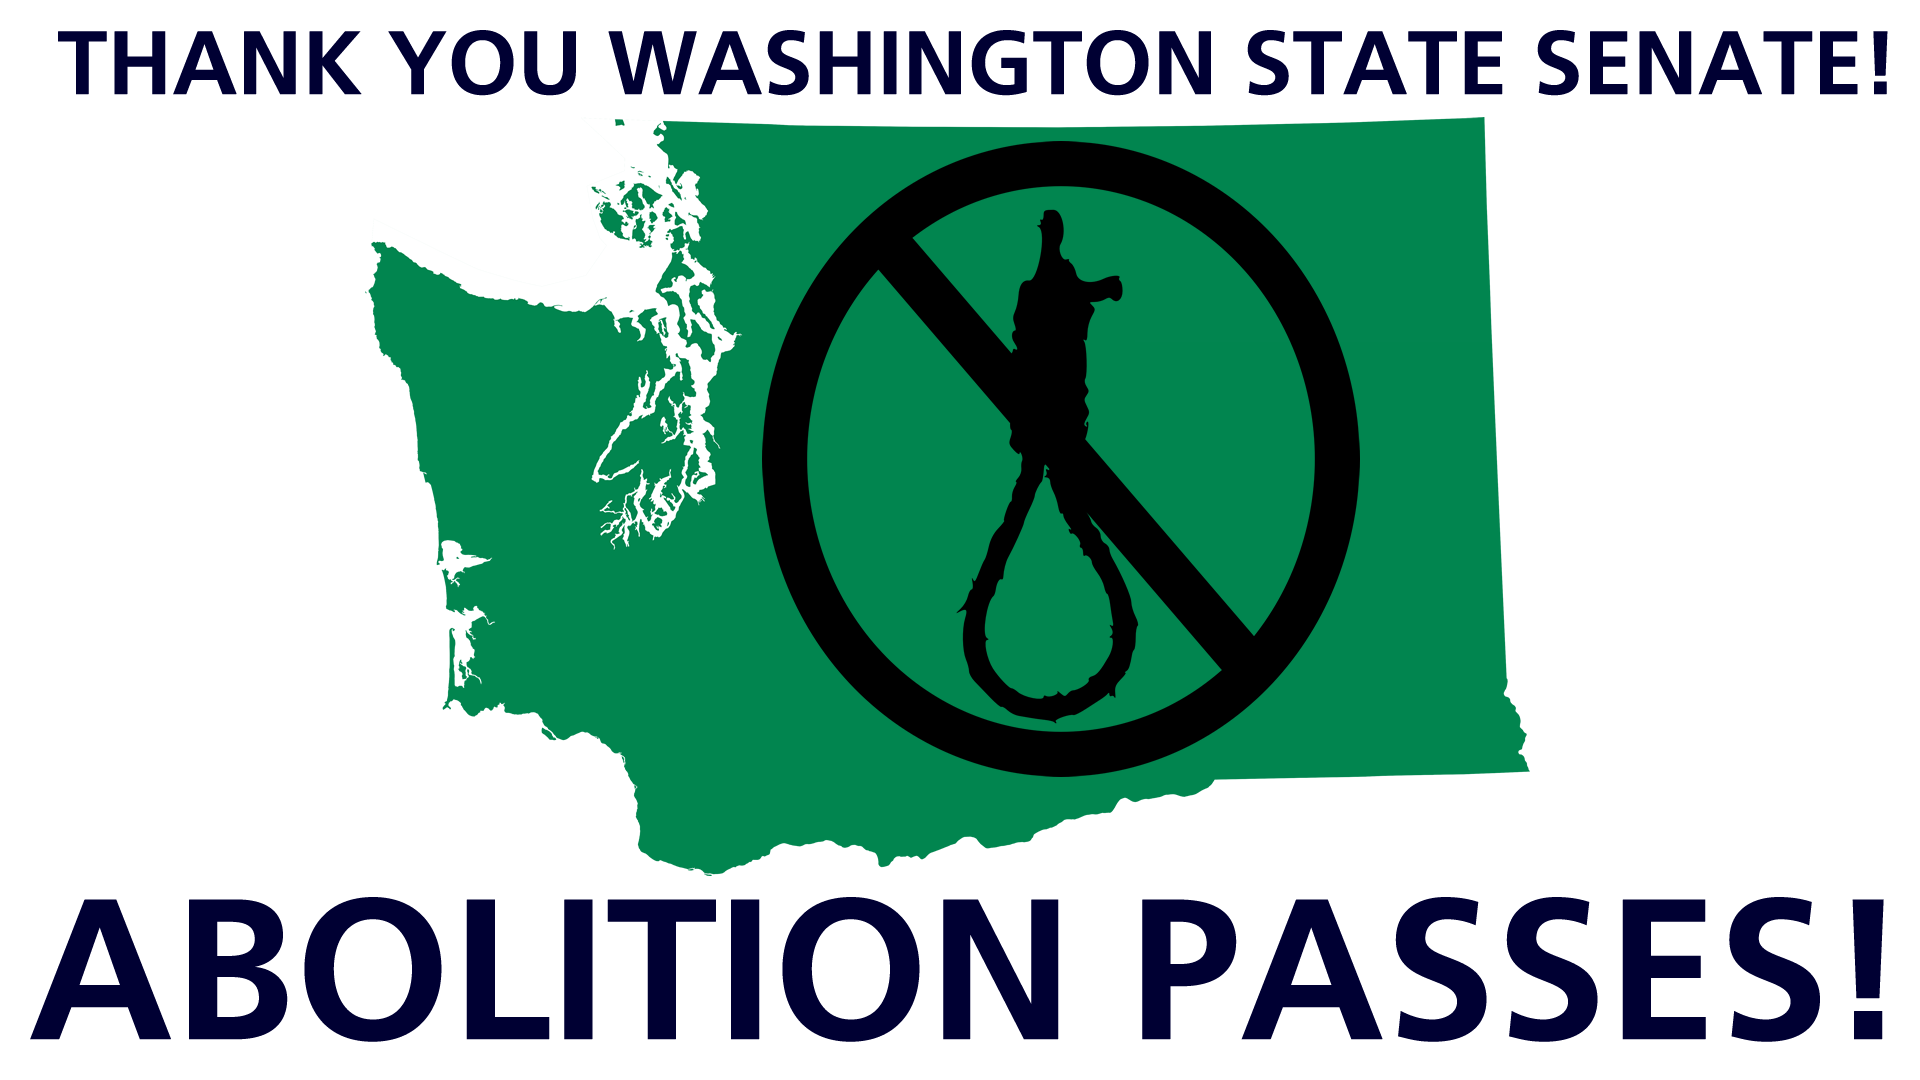 Thank you Washington State Senate!